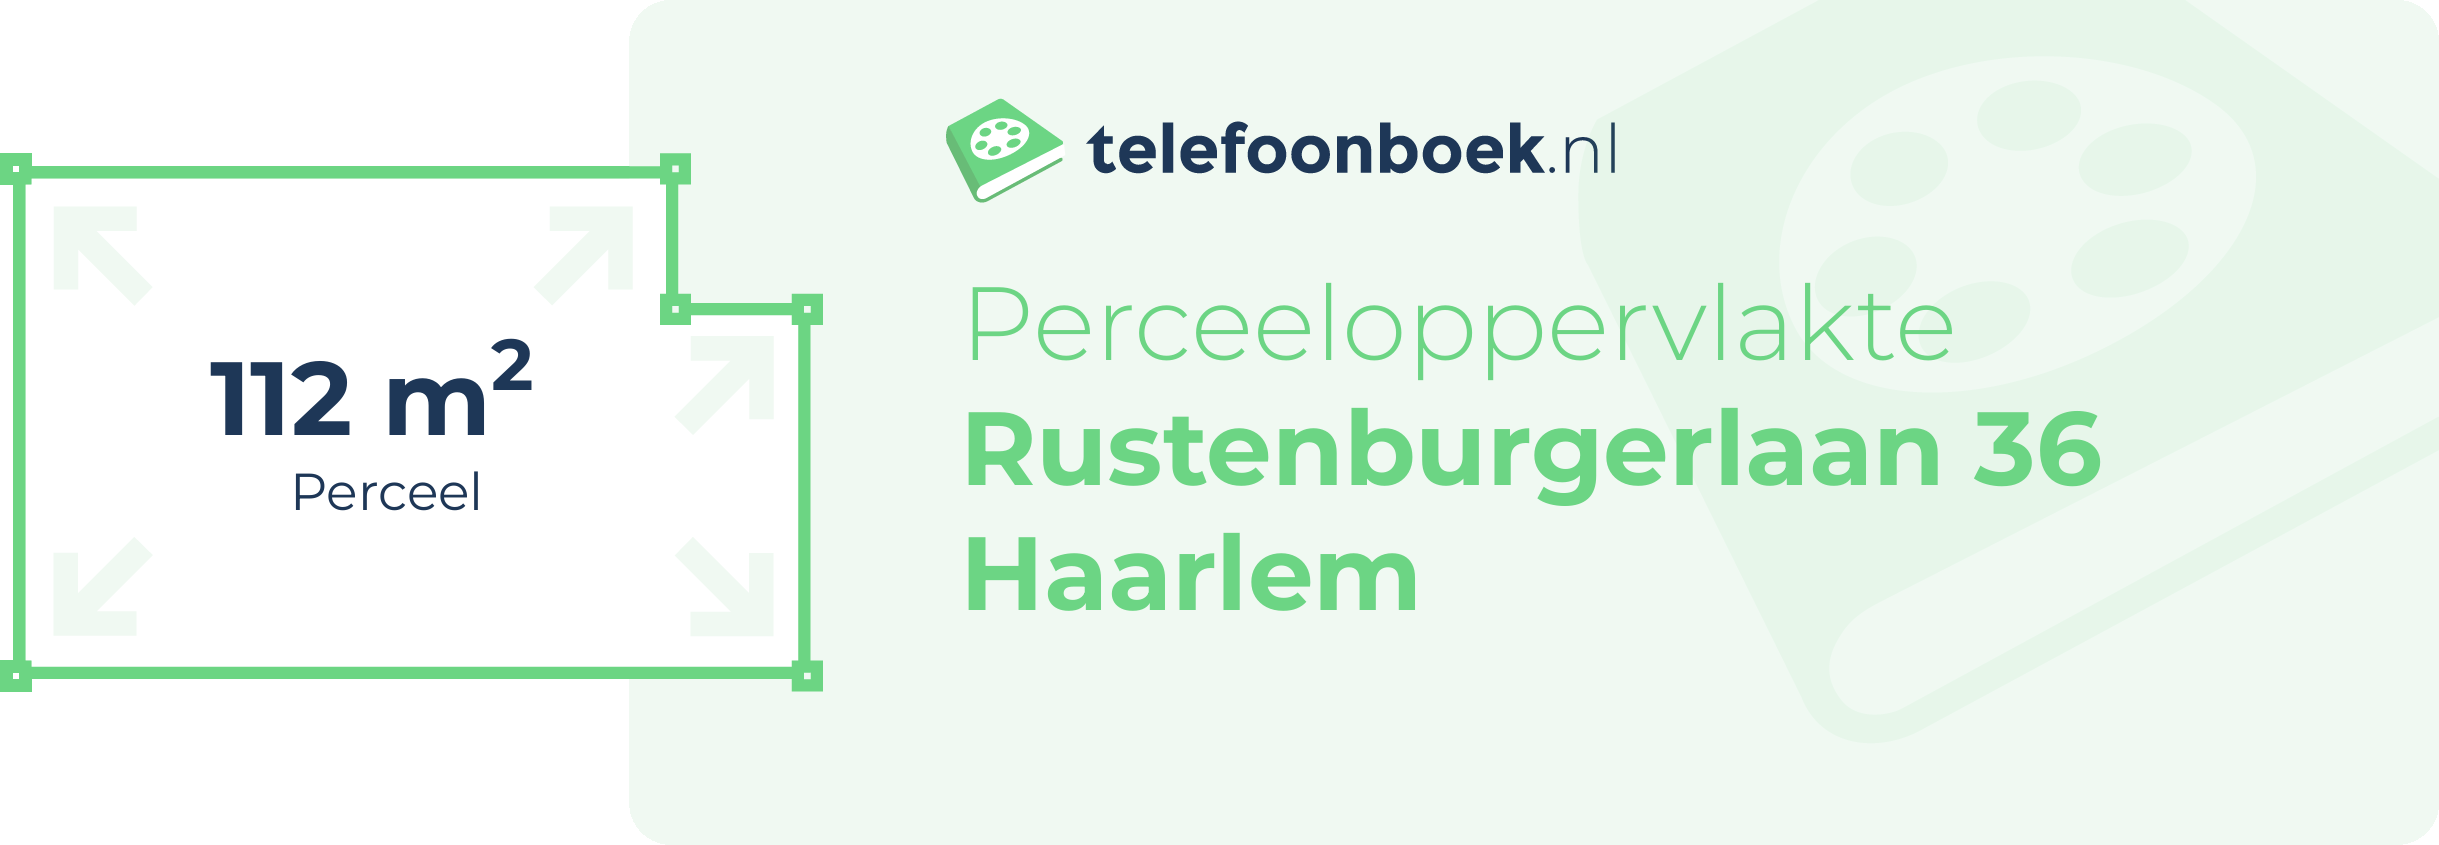 Perceeloppervlakte Rustenburgerlaan 36 Haarlem